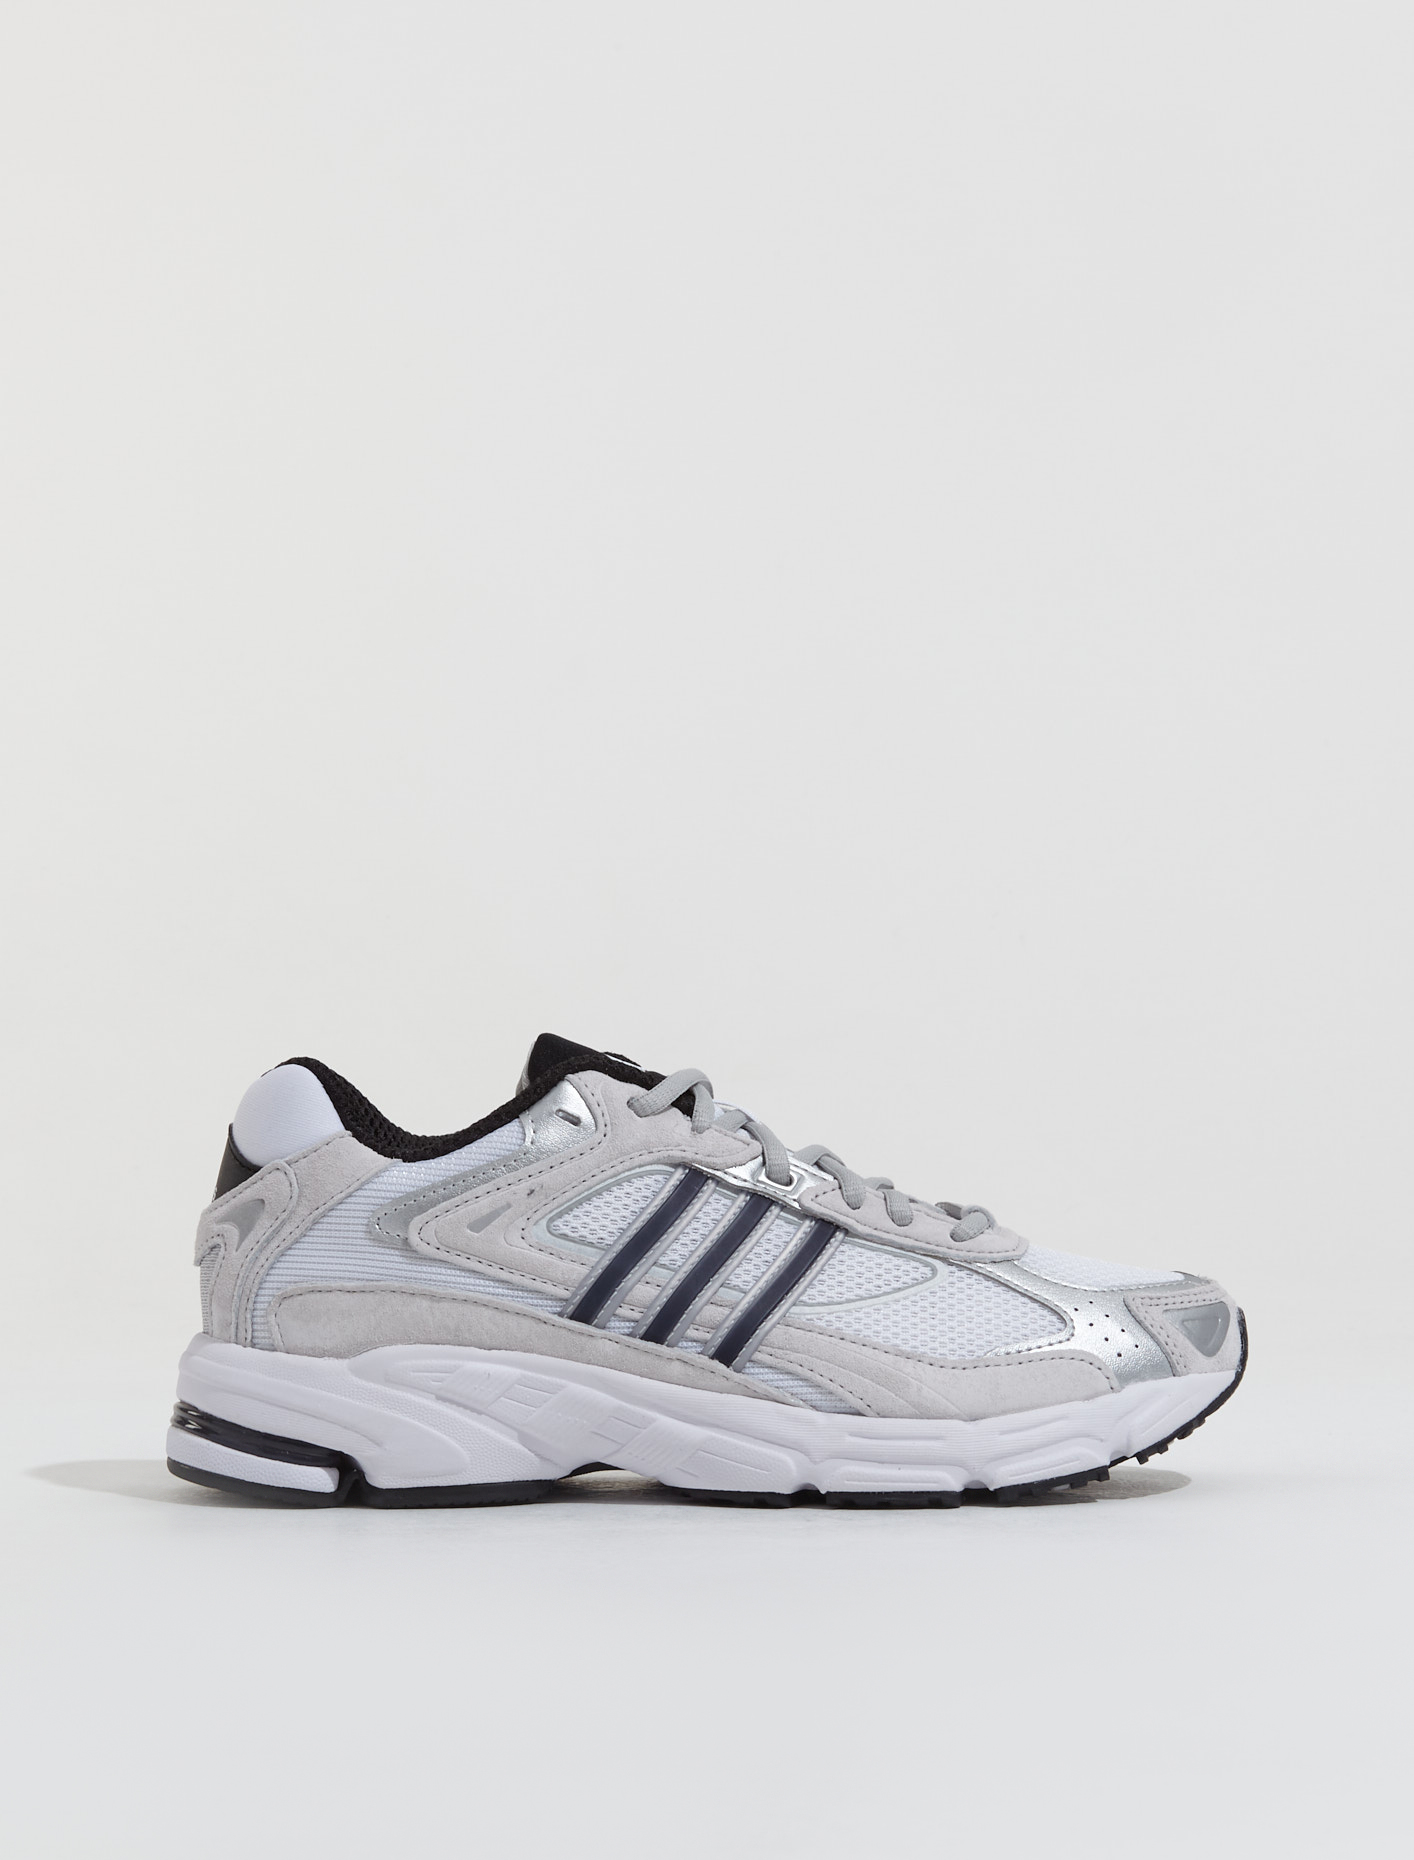 Adidas Response CL Sneaker in Cloud White | Voo Store Berlin | Worldwide  Shipping